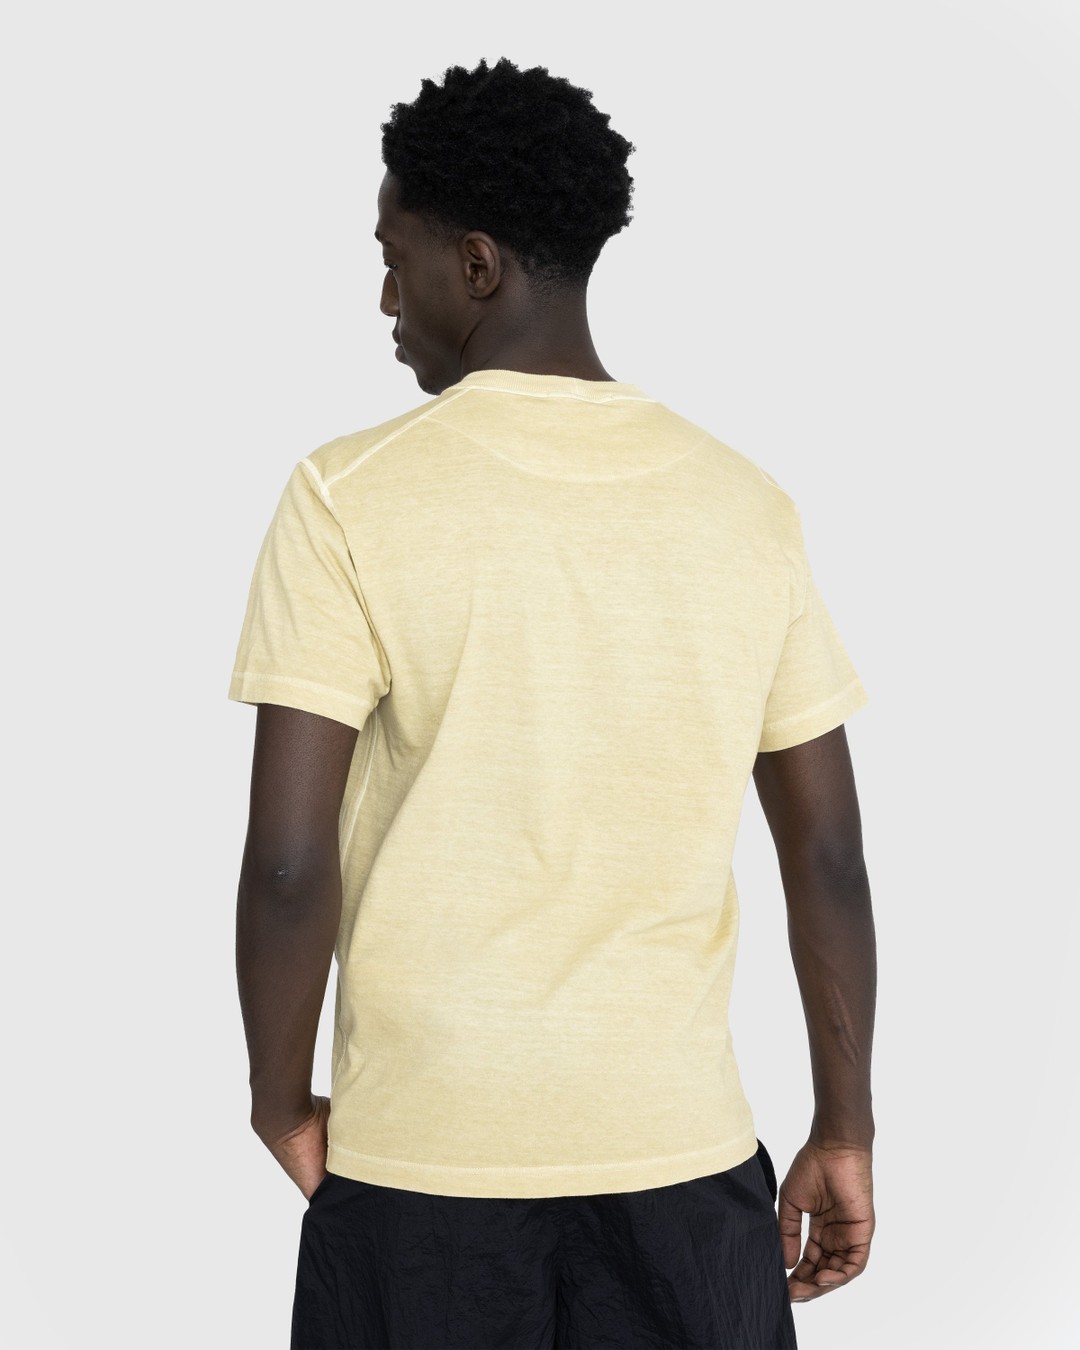 Stone Island – Fissato T-Shirt Natural Beige - T-shirts - Beige - Image 3